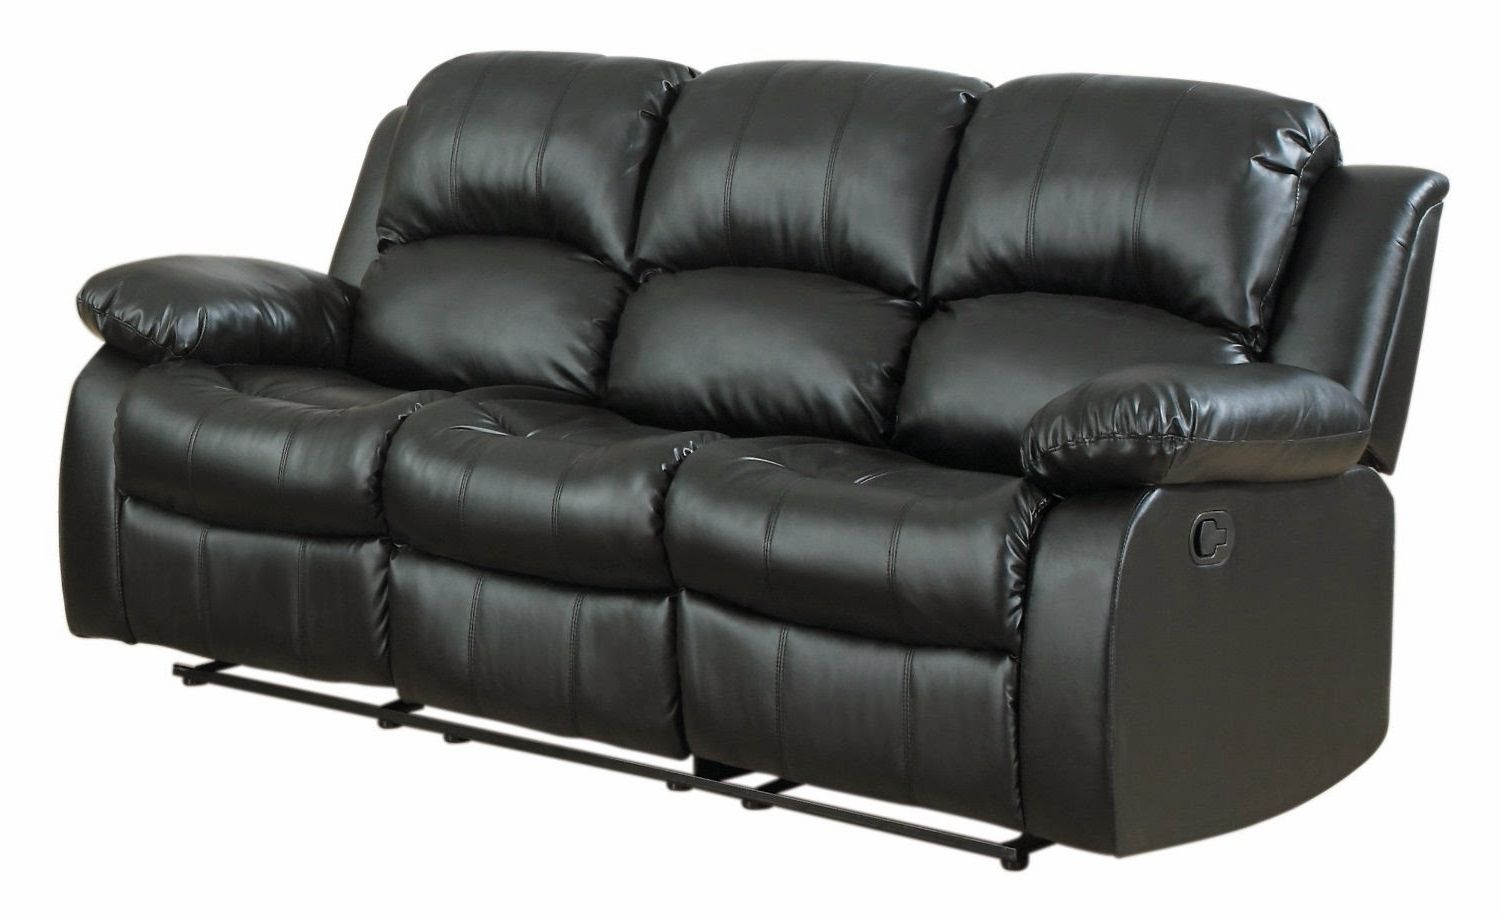 Berkline Sofas With Popular Reclining Sofas For Sale: Berkline Leather Reclining Sofa Costco (Photo 5 of 15)